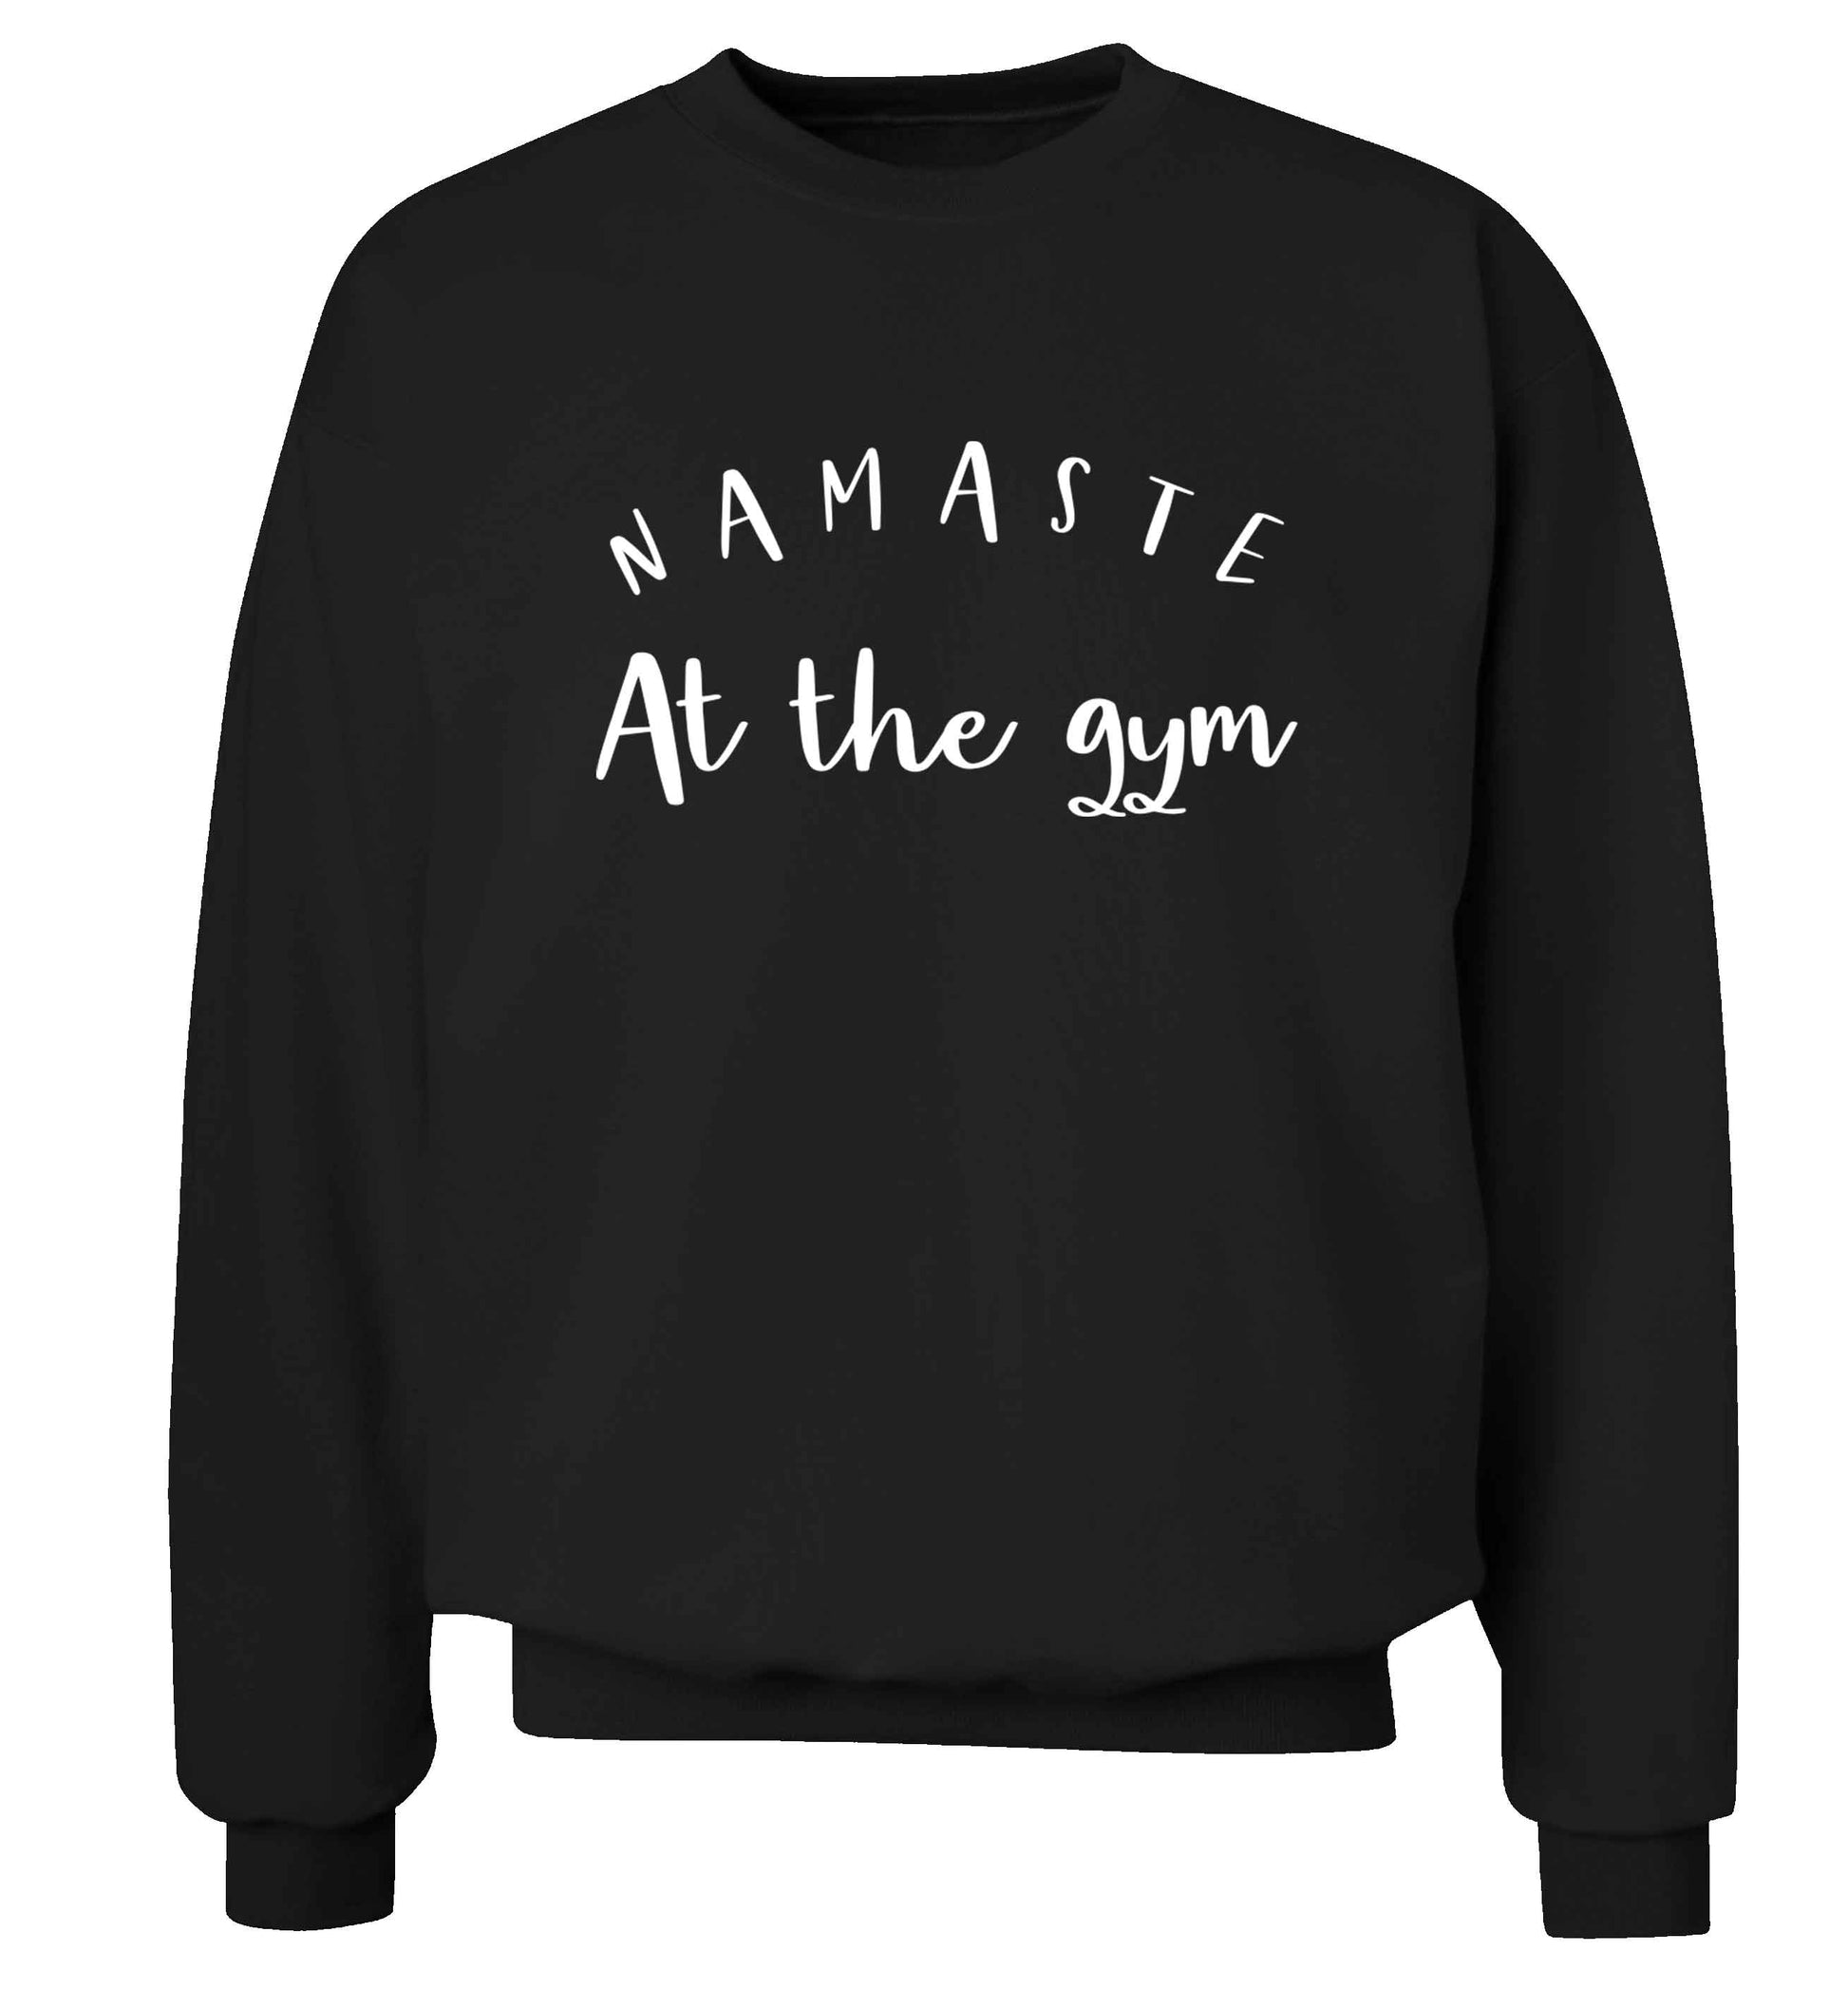 Namaste at the gym Adult's unisex black Sweater 2XL